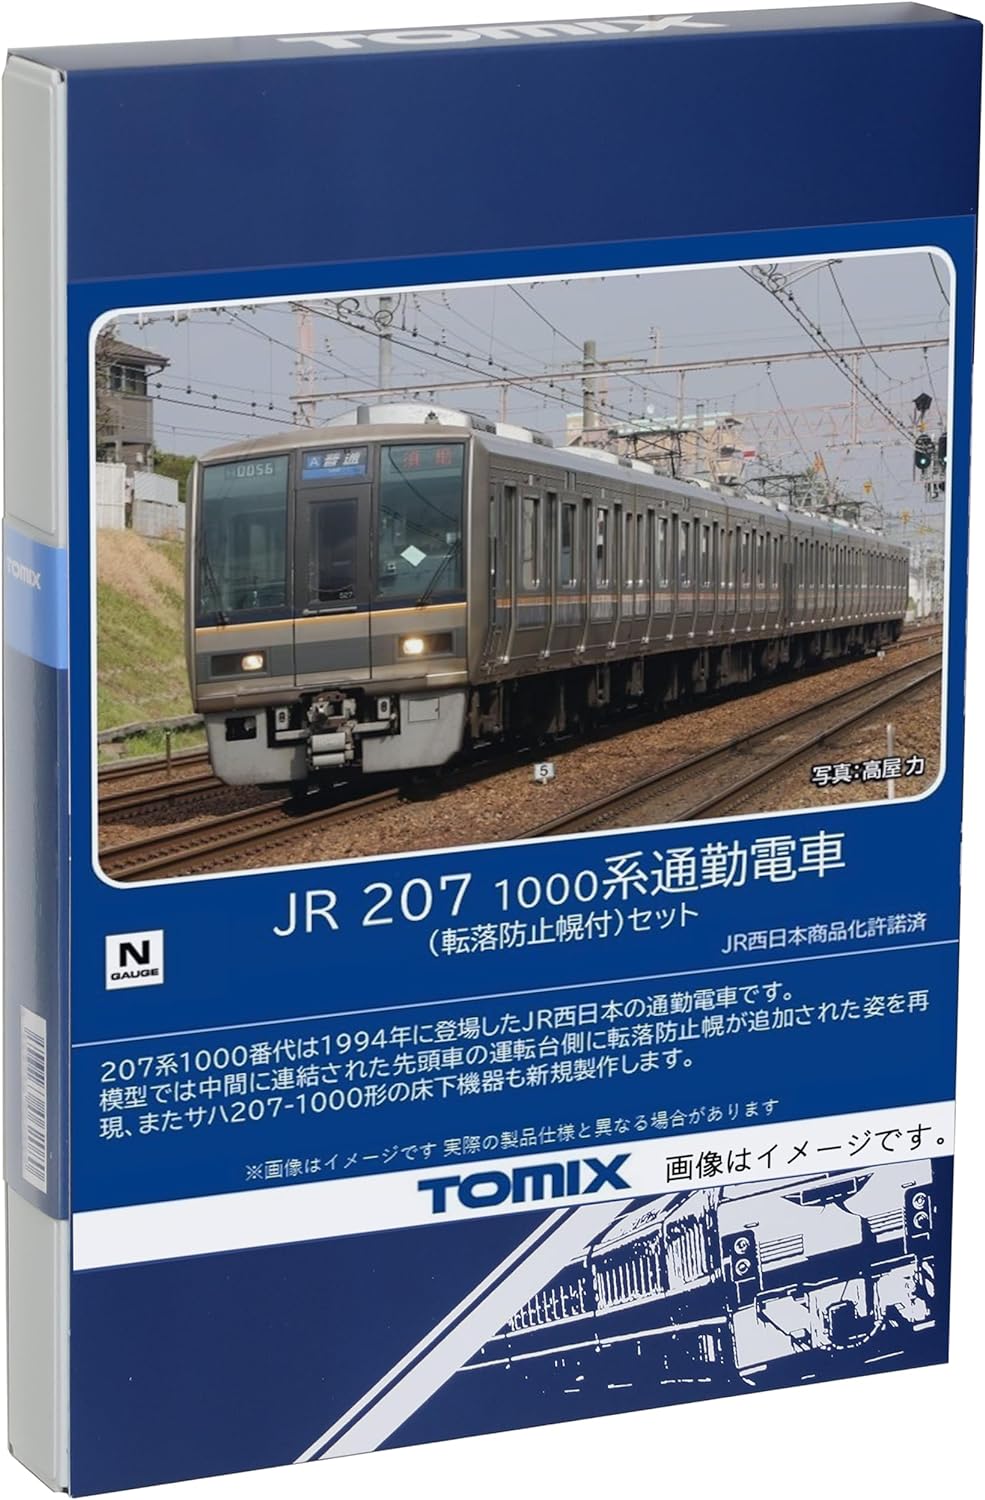 TOMIX 98837 N Gauge JR 207 1000 Series Fall Prevention Cape Set, Railway Model Train - BanzaiHobby